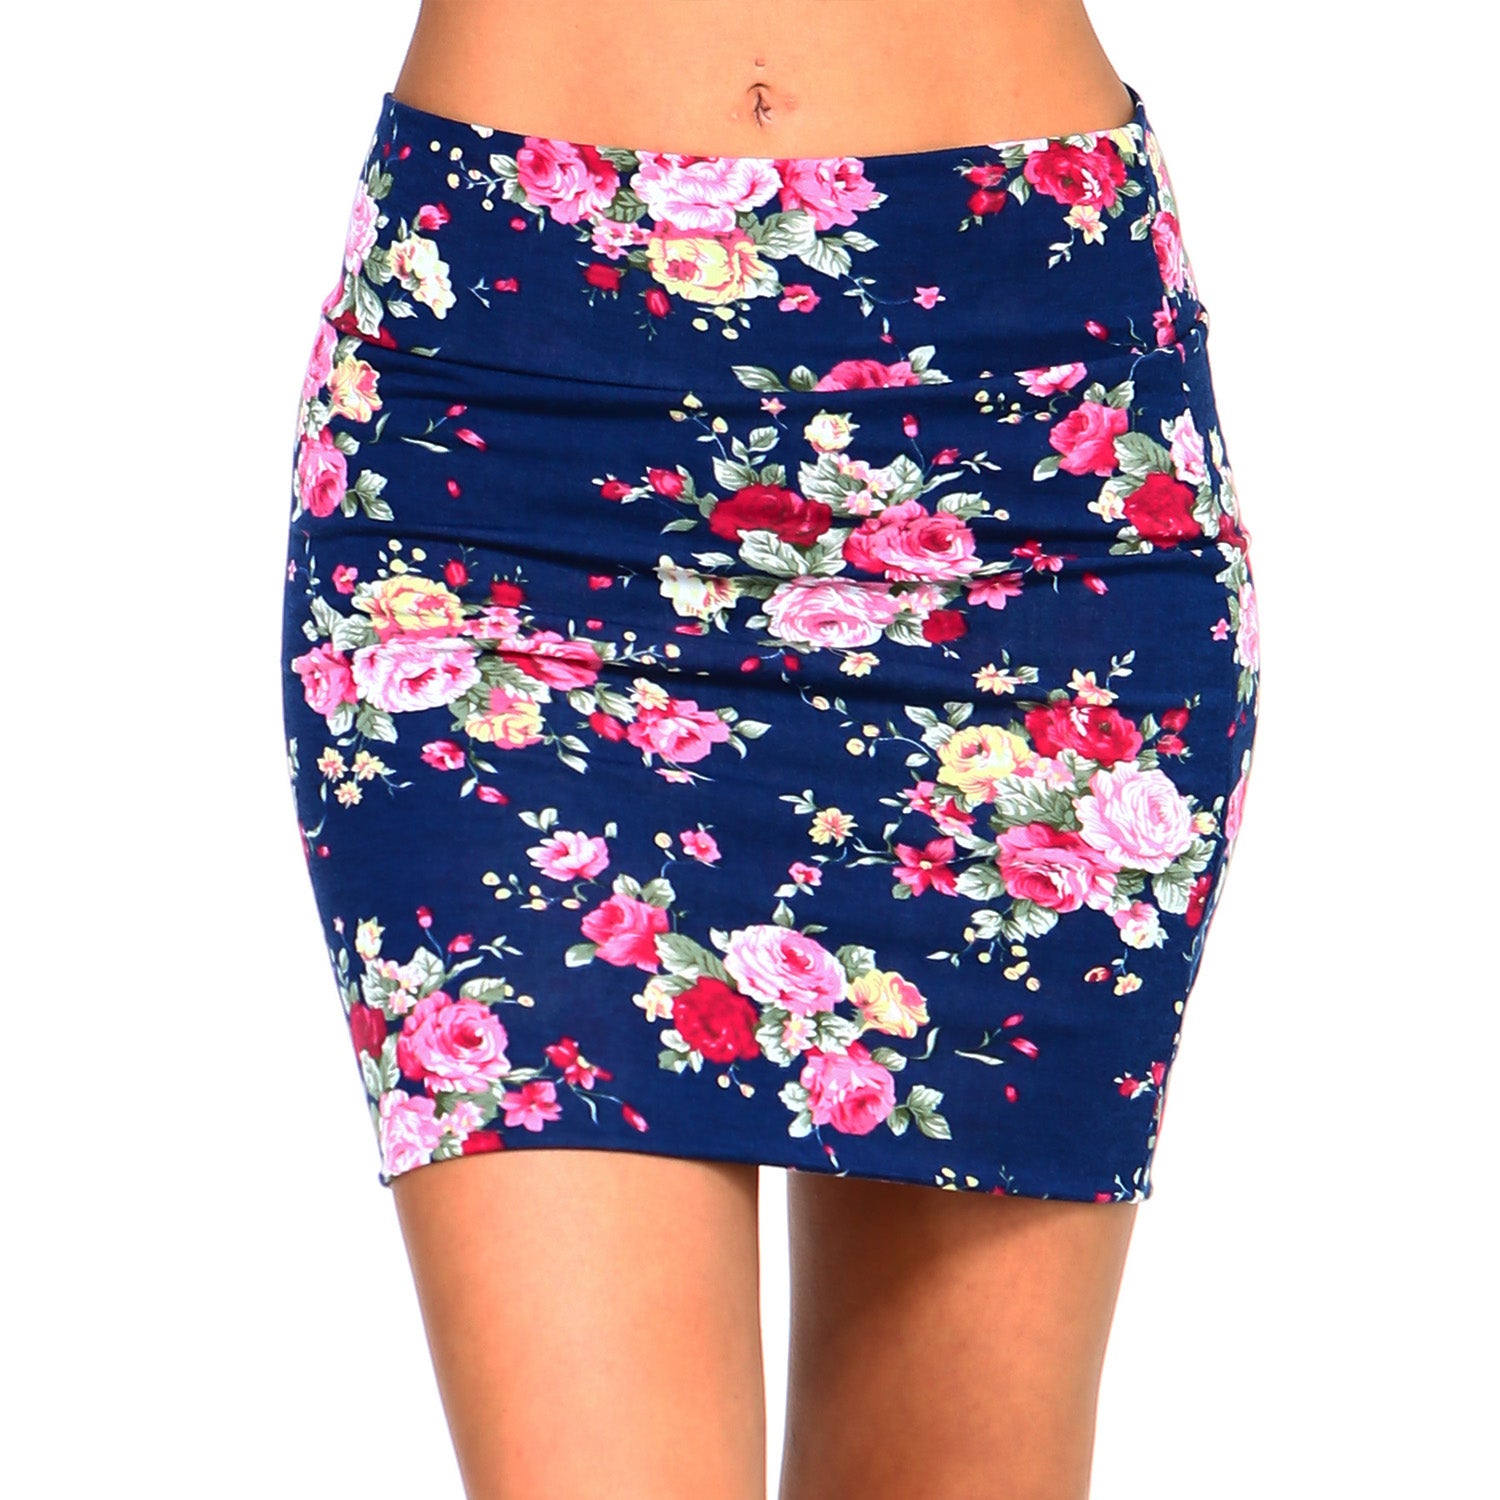 Fashionazzle Women's Casual Stretchy Bodycon Pencil Mini Skirt Print #35